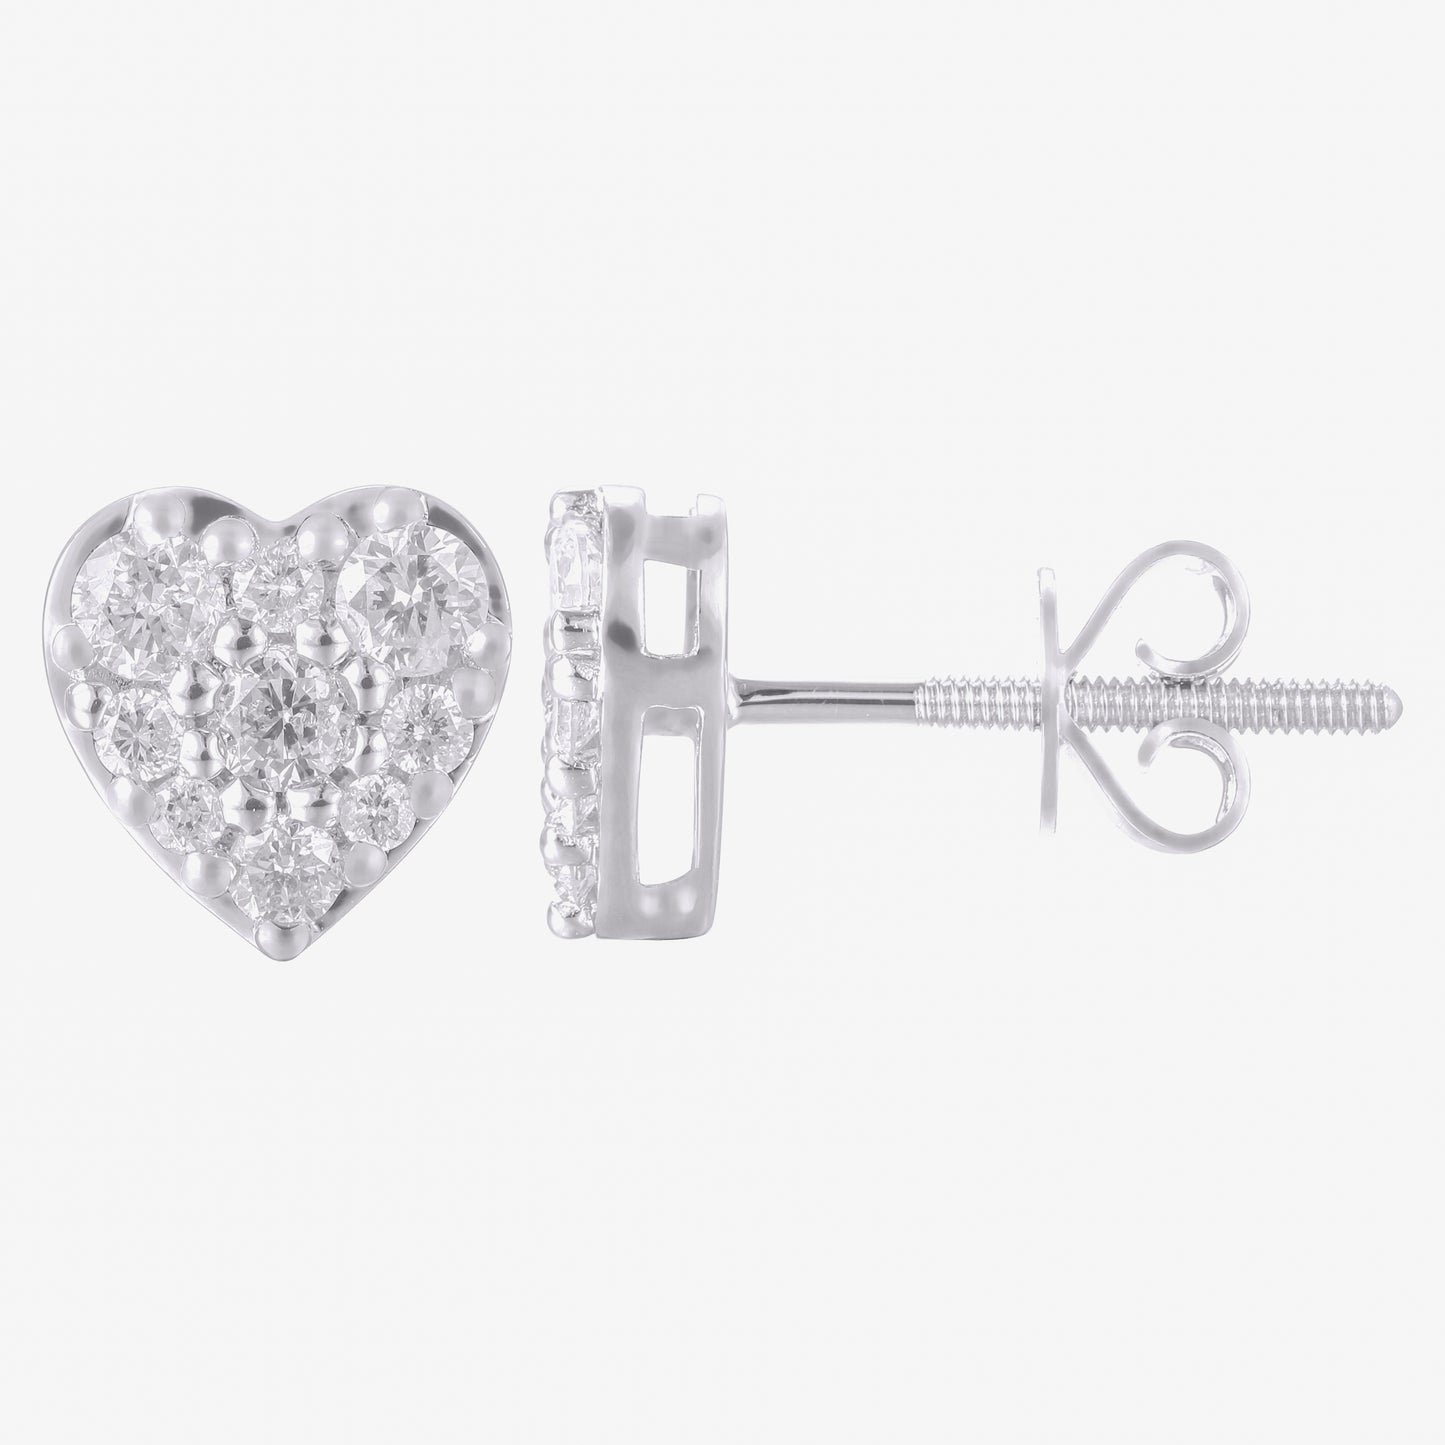 10 Karat White Gold 0.50 Carat Diamond Heart Earrings-0125784-WG